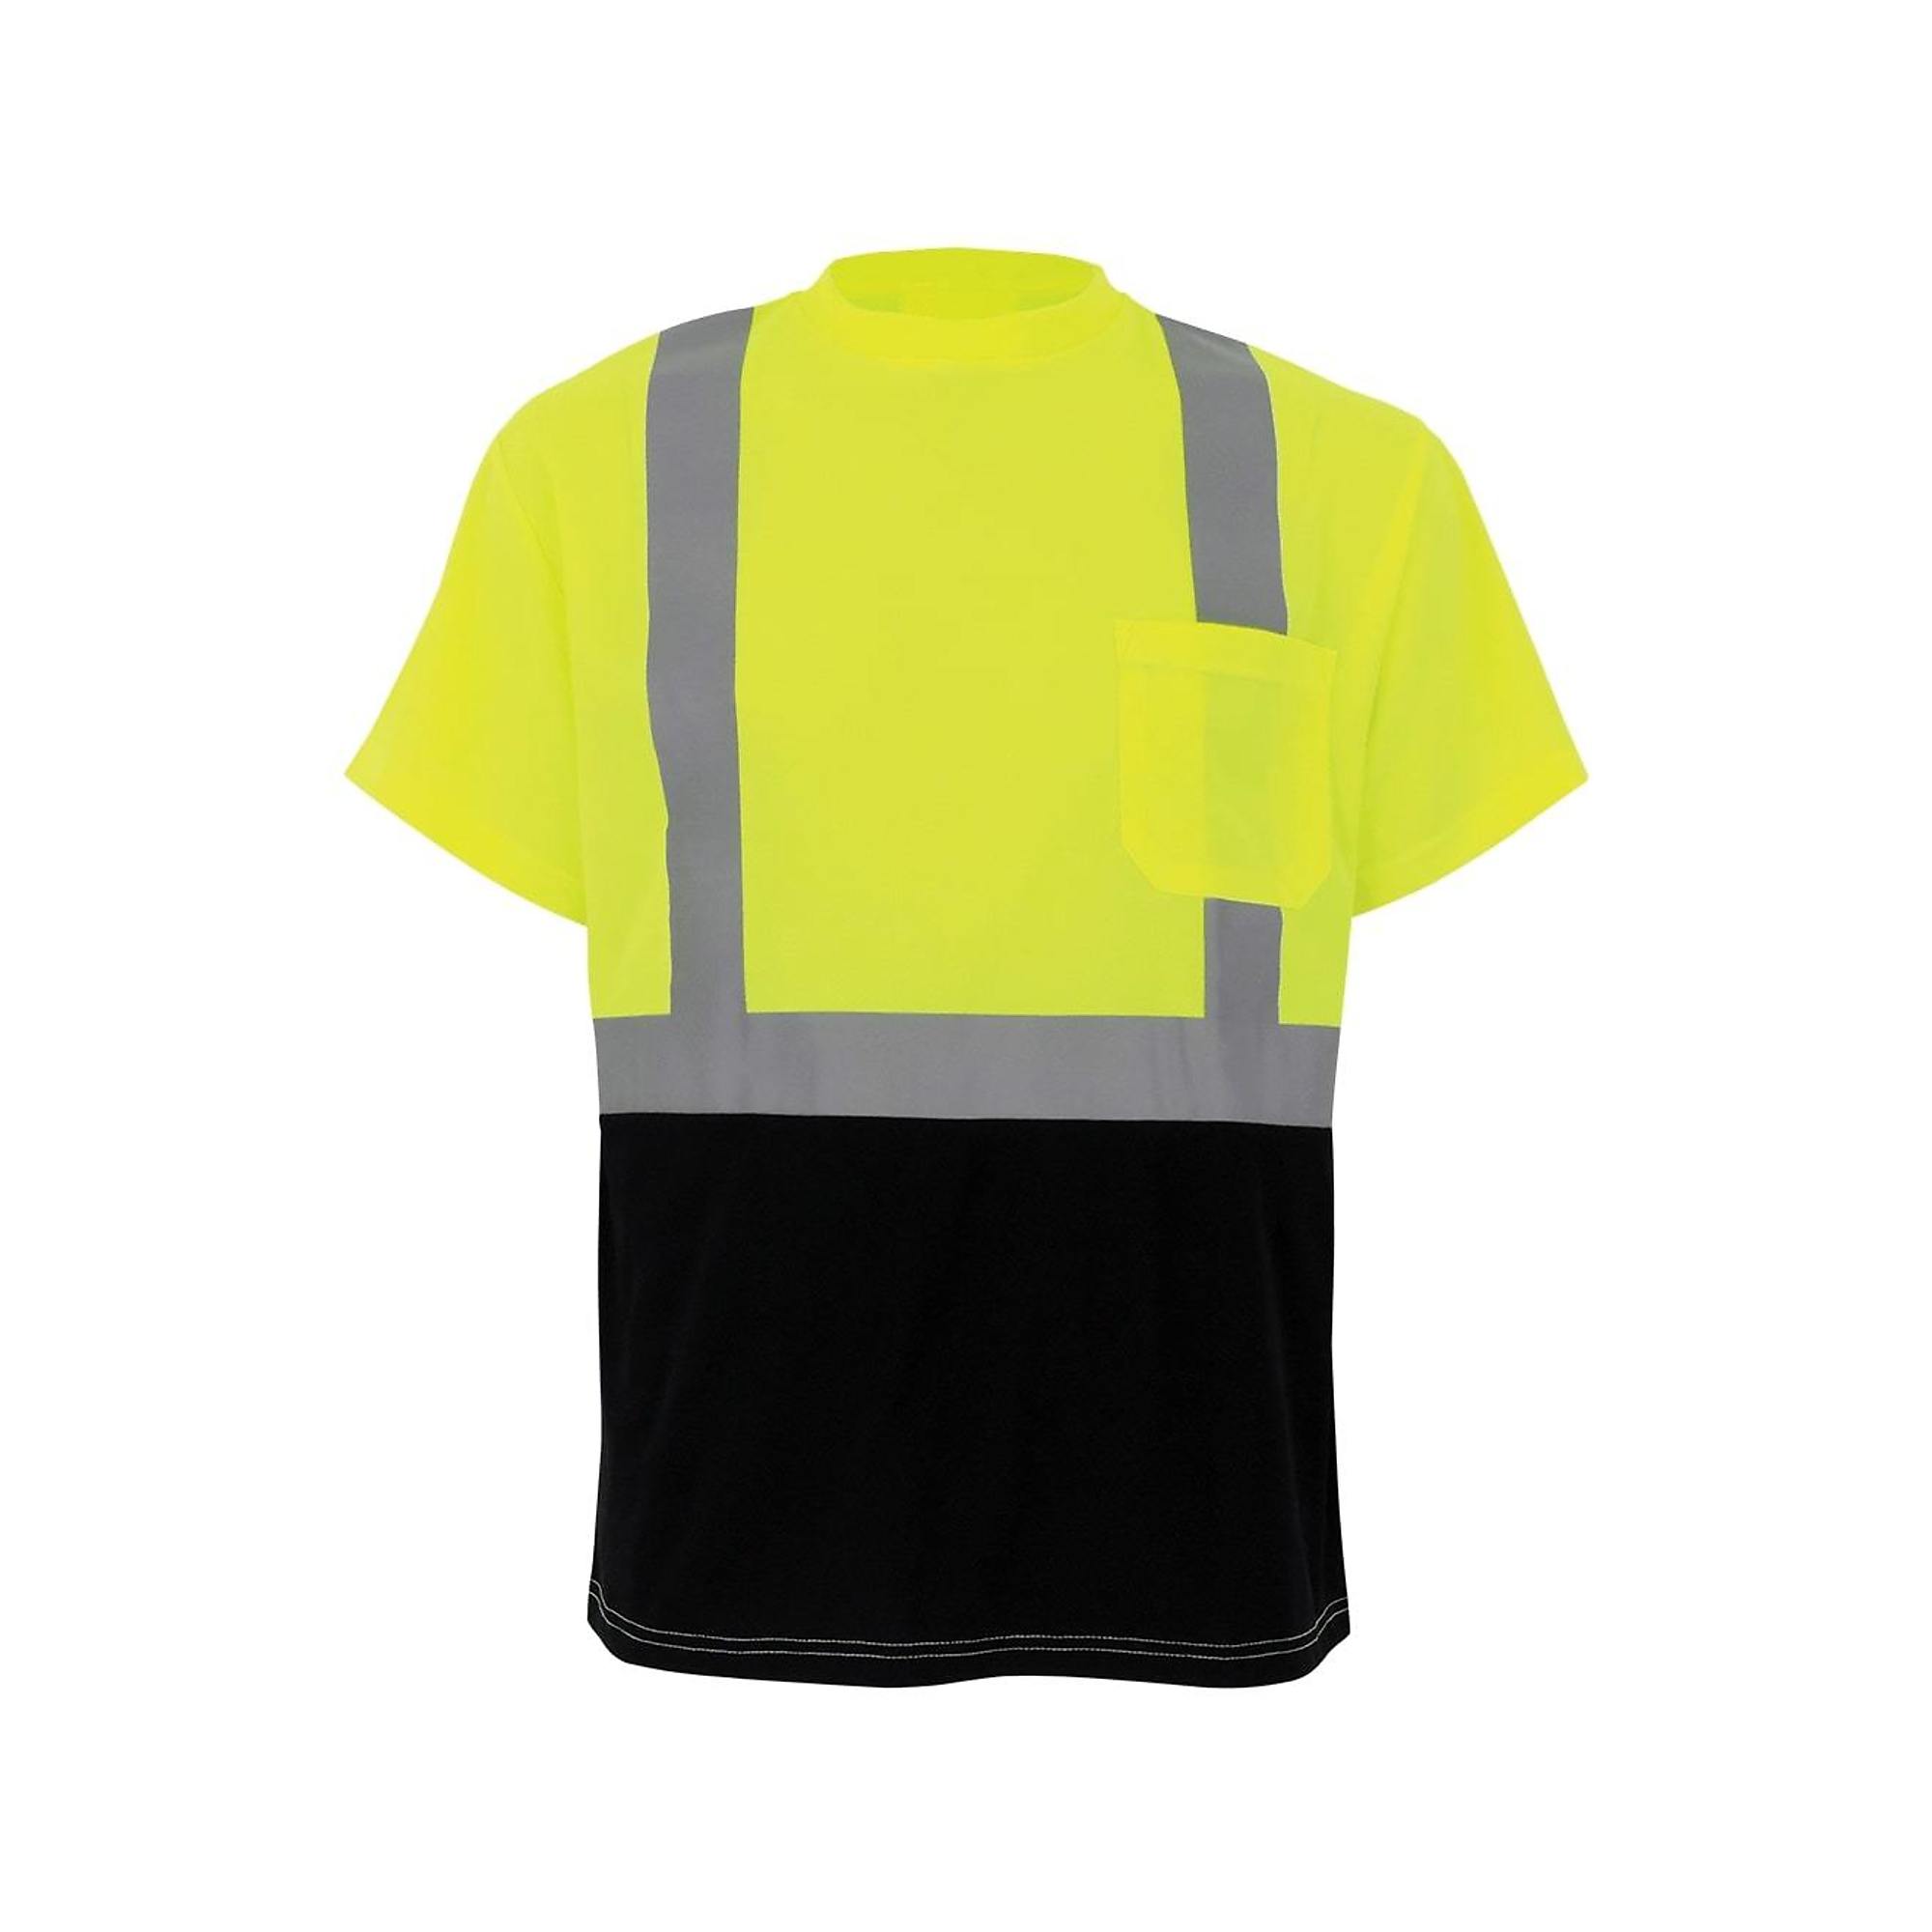 FrogWear, HV Yellow/Green, Class 2 Self-Wicking, Short-Sleeve Shirt, Size 4XL, Model GLO-007B-4XL